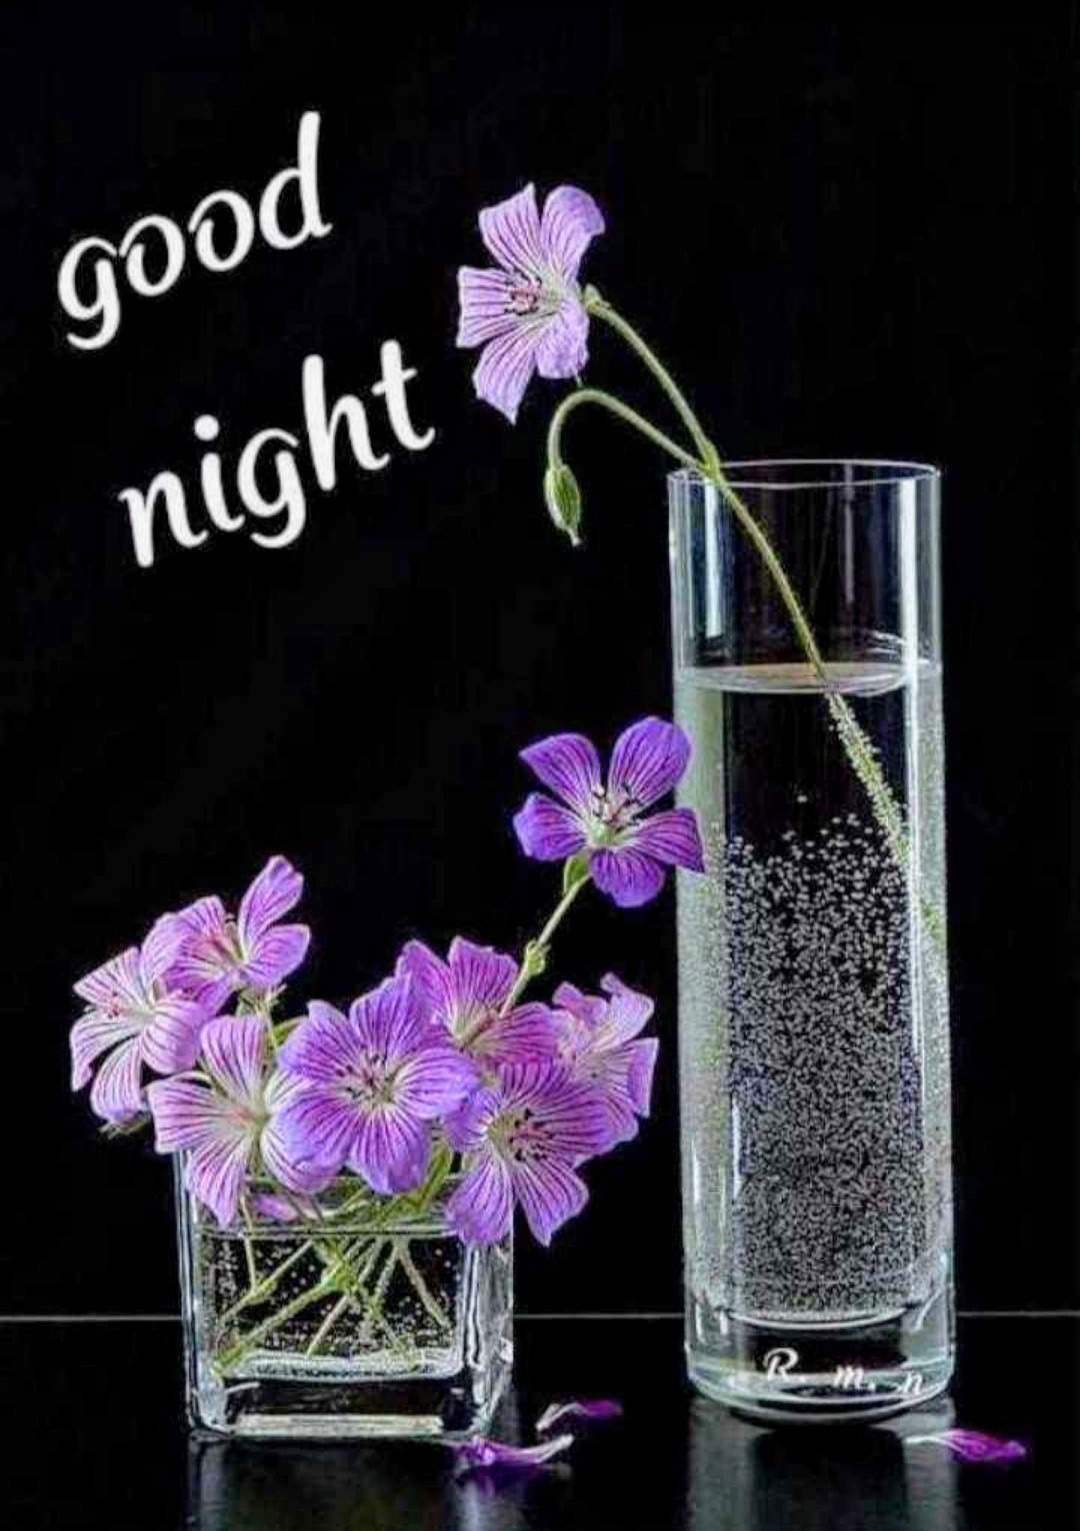 Beautiful Good Night Image - DesiComments.com